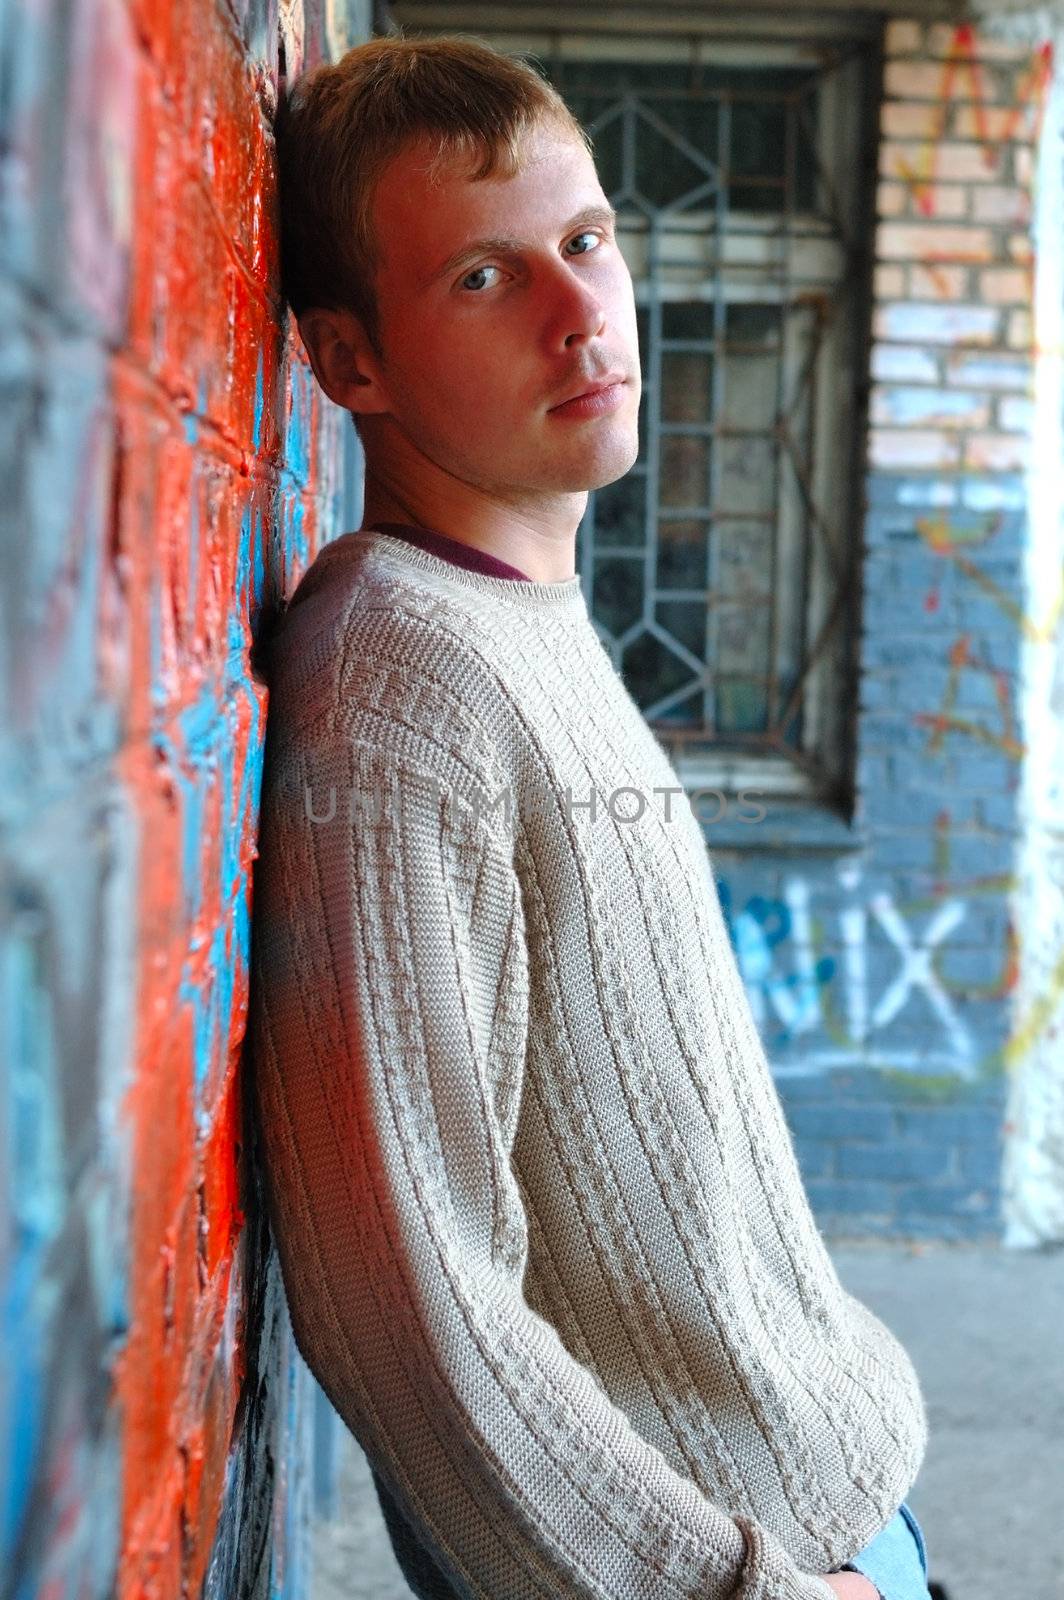 Young stylish man with blonde hair stand near graffiti brick wall.